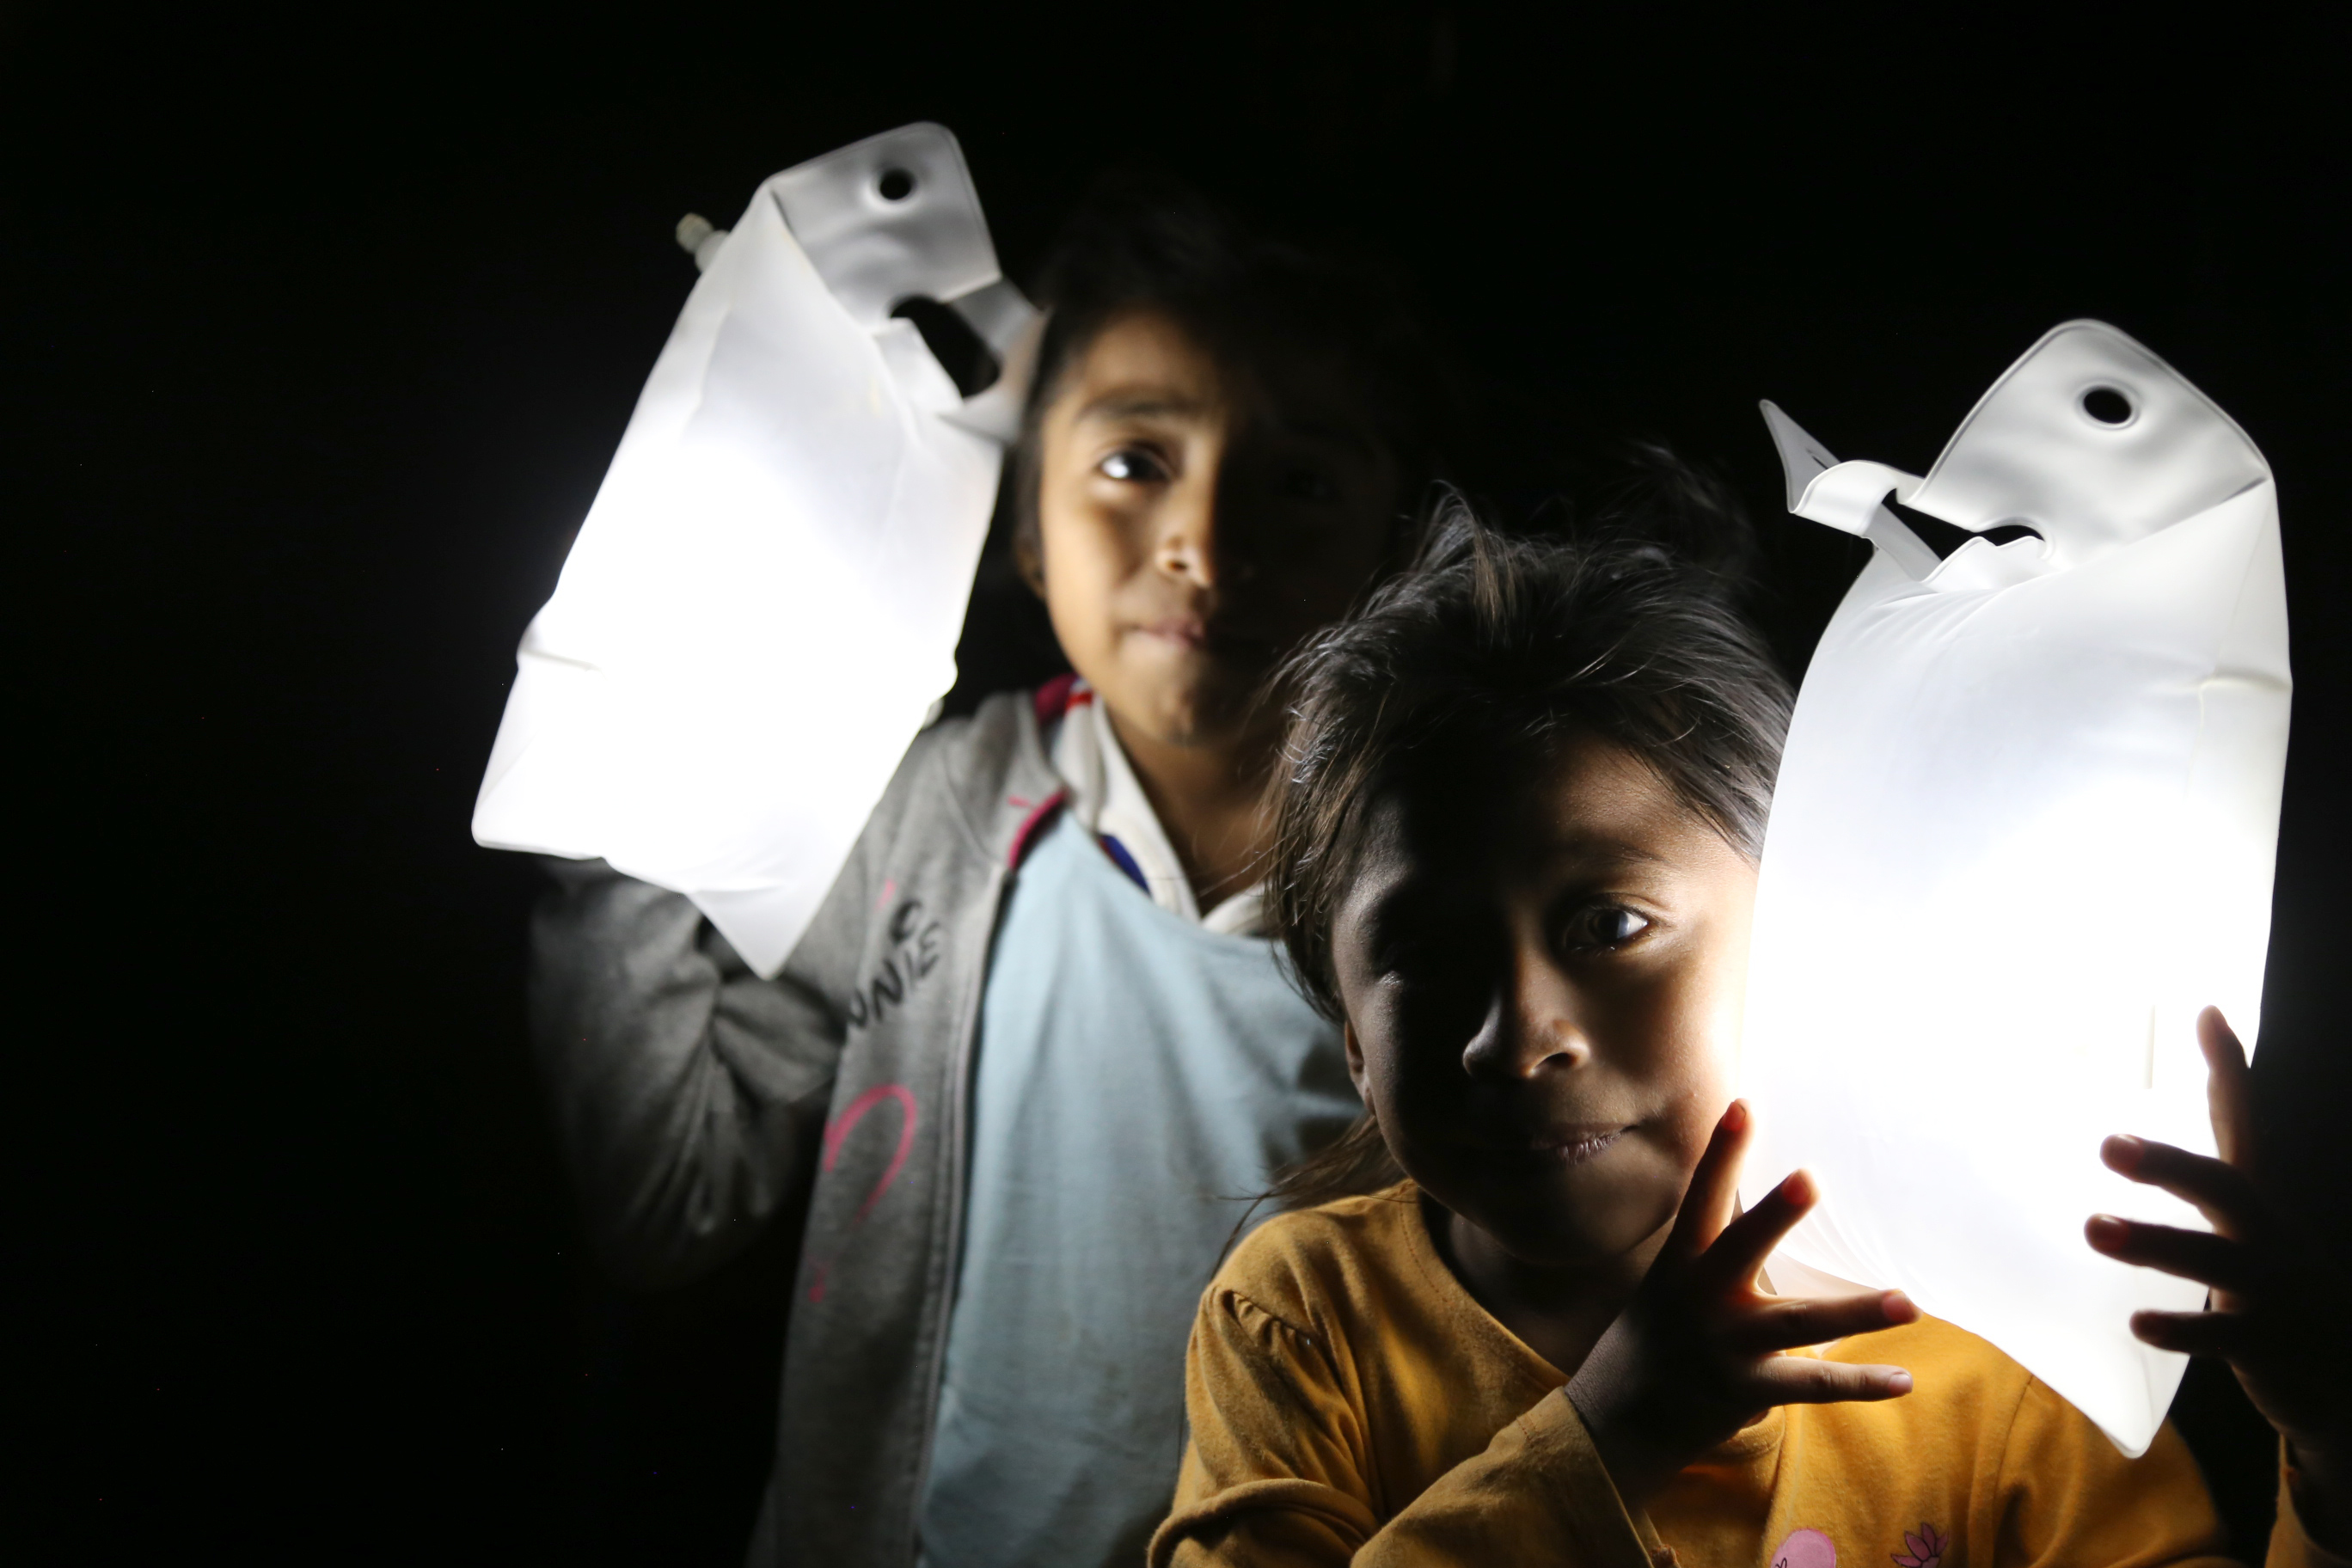 Two children light up the night in the dark